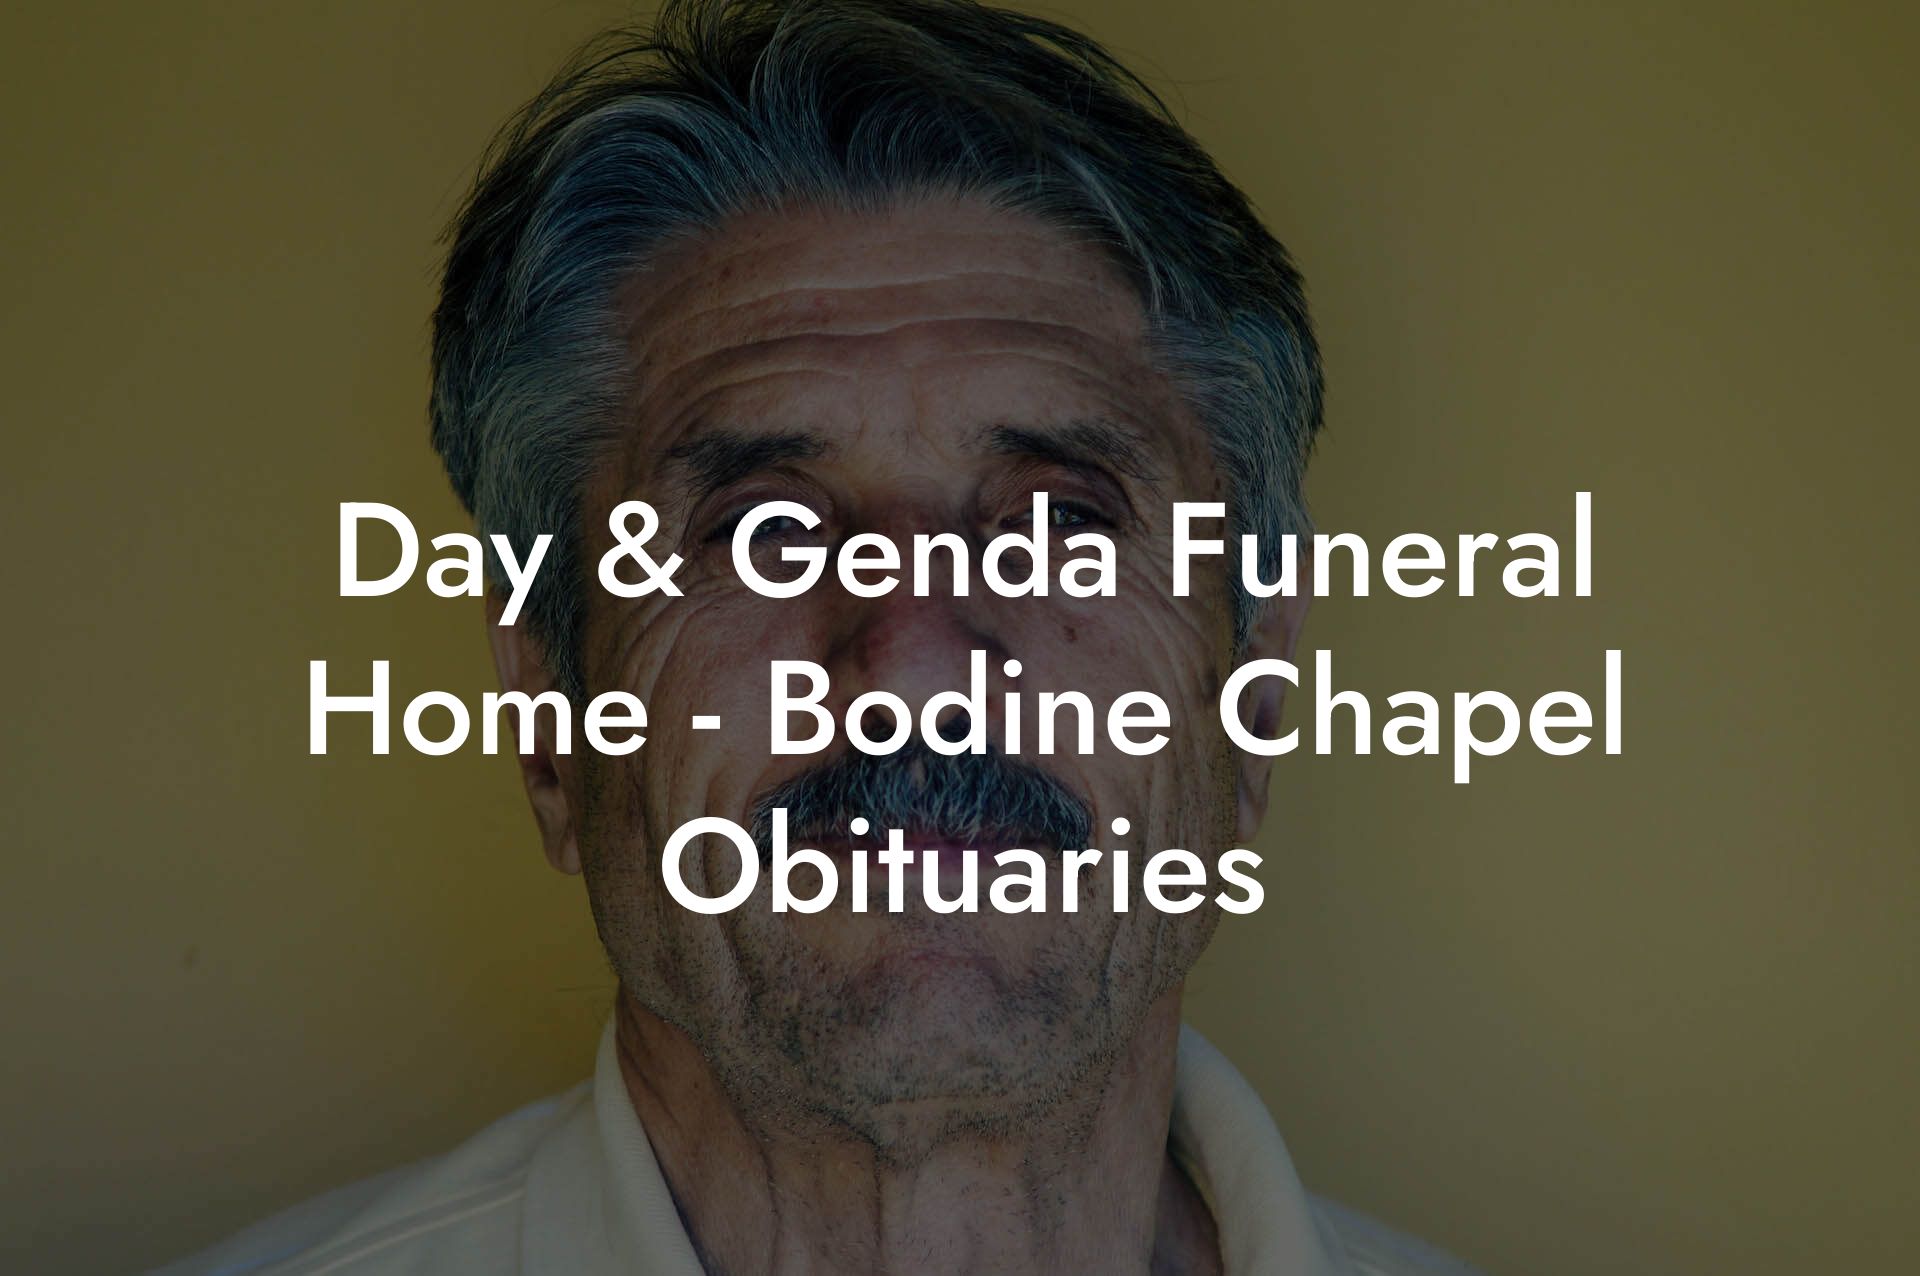 Day & Genda Funeral Home - Bodine Chapel Obituaries